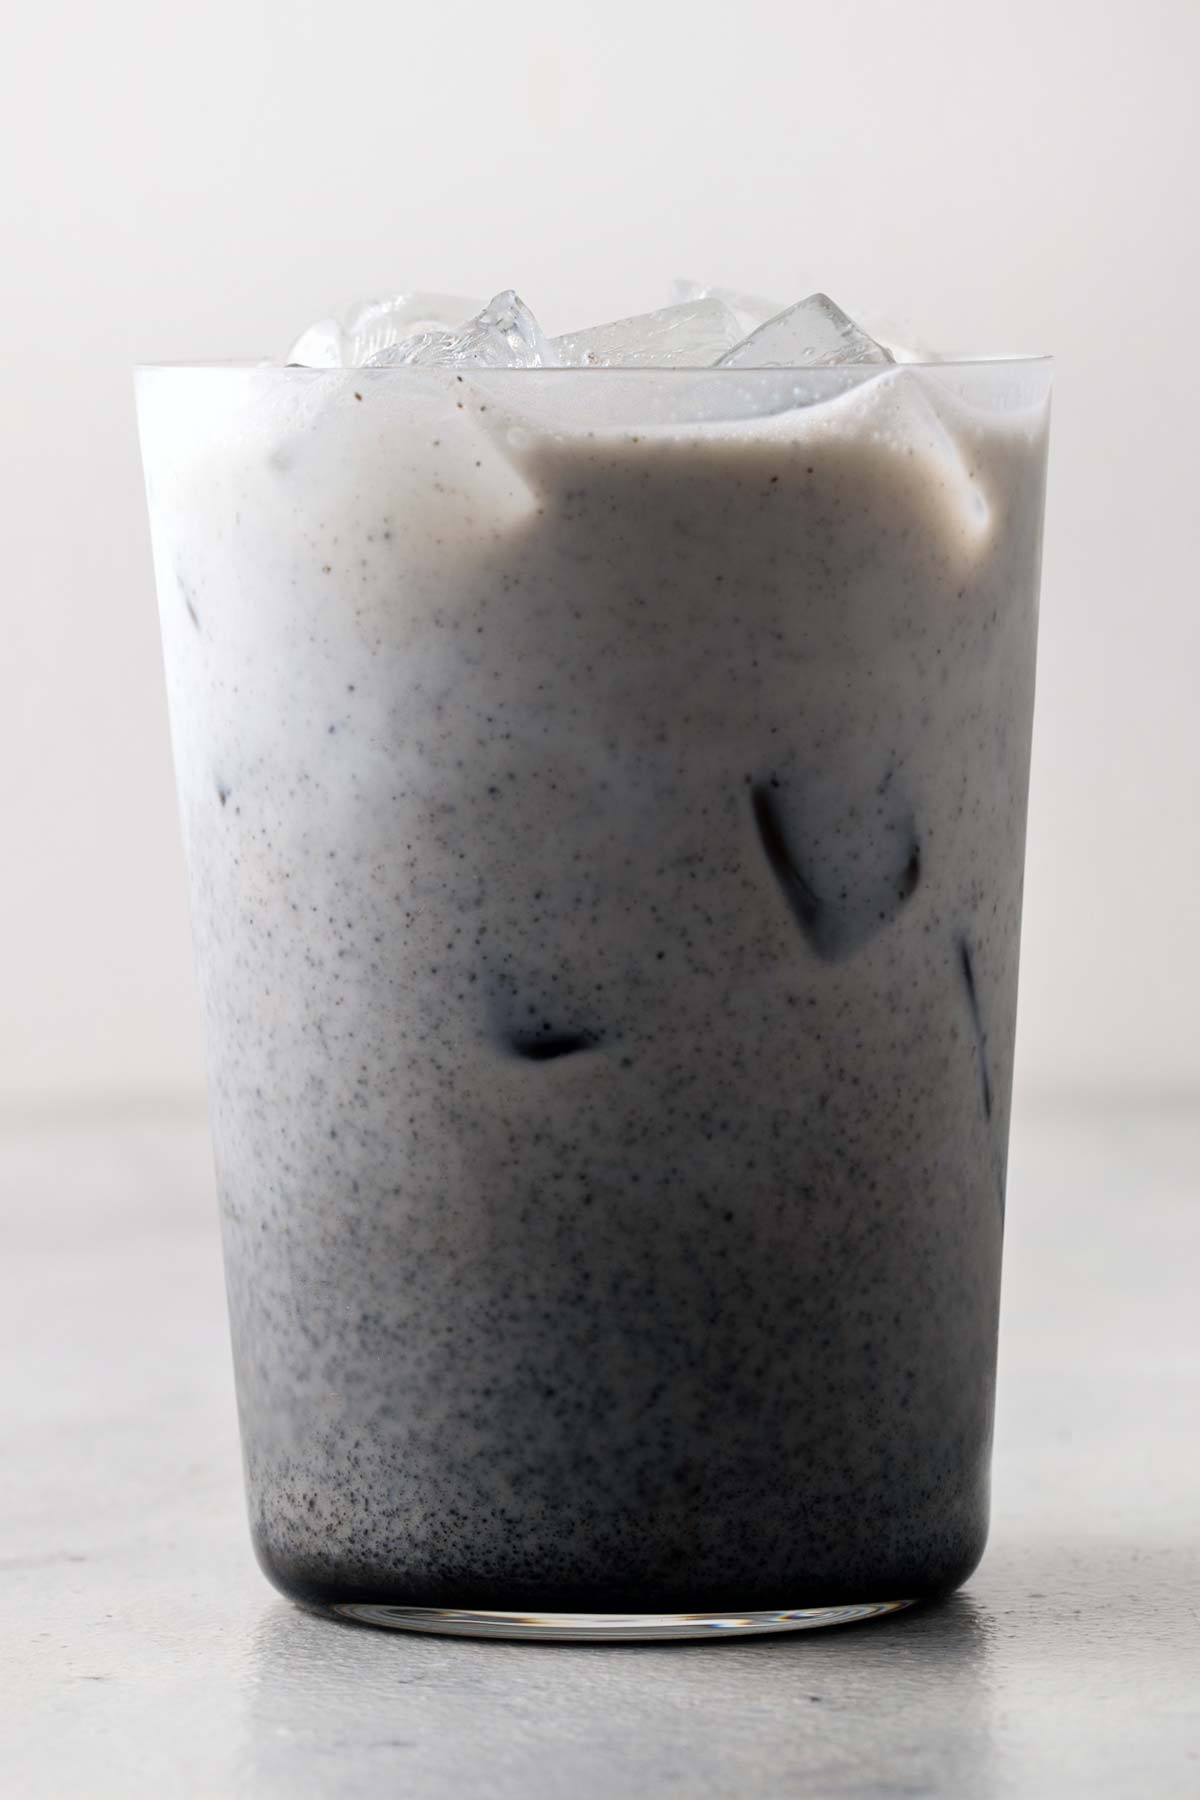 Iced Black Sesame Latte in a glass.